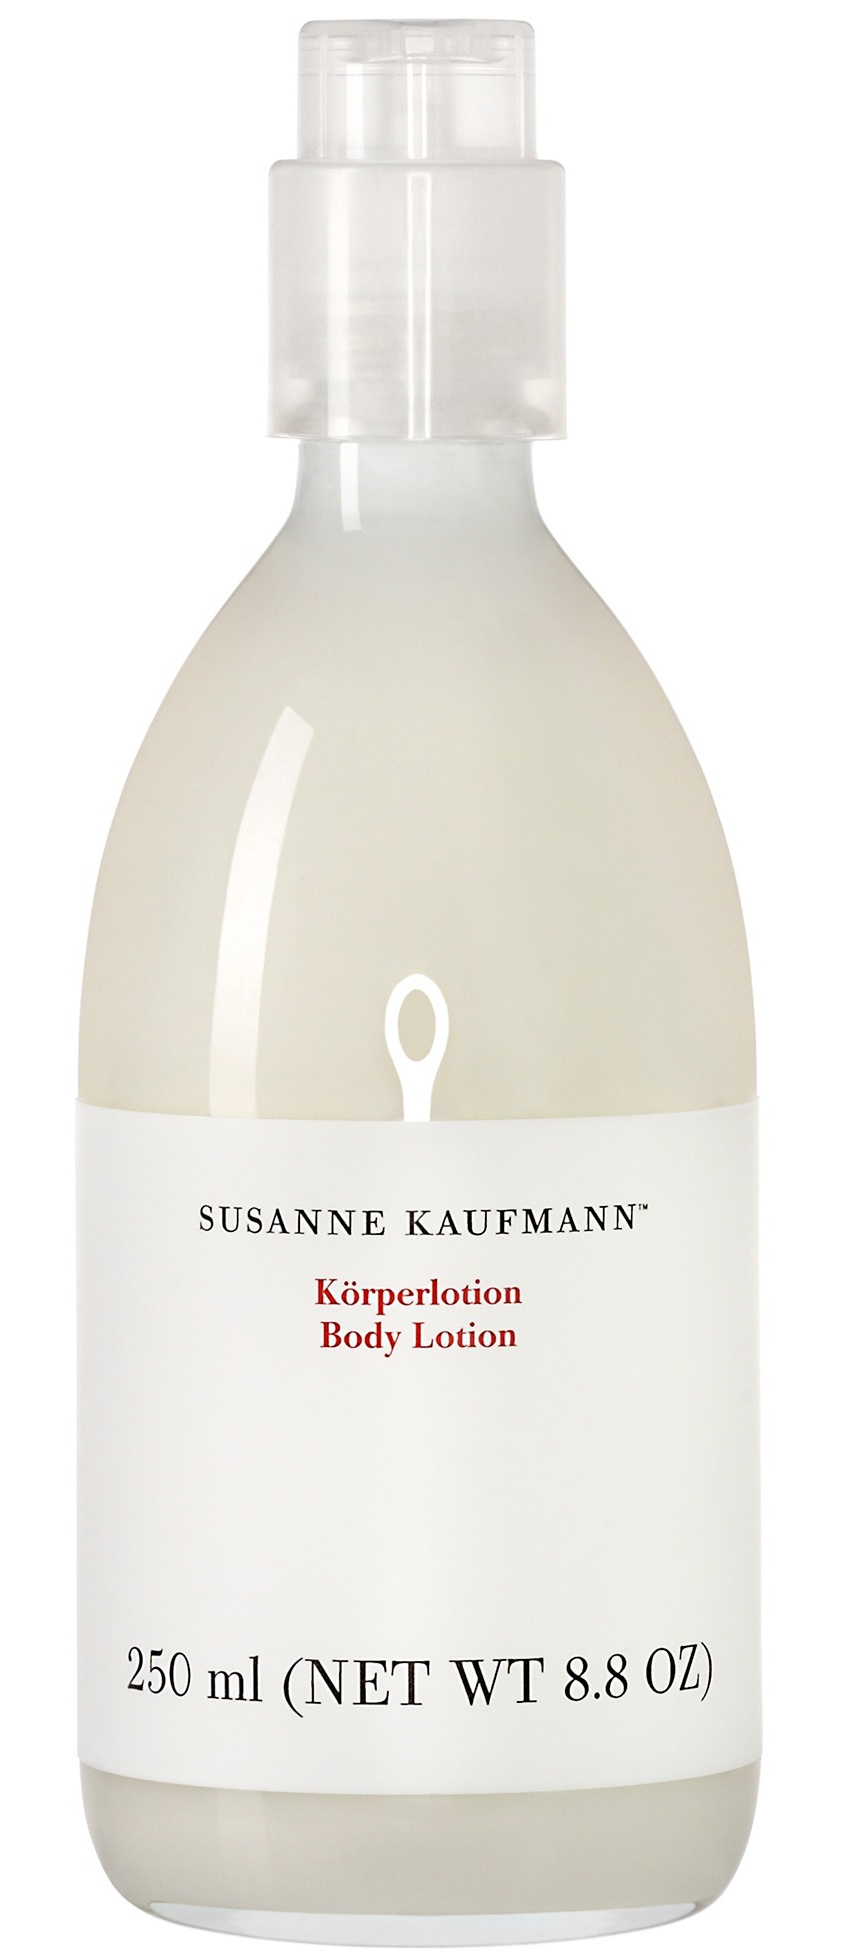 Susanne Kaufmann Body Lotion